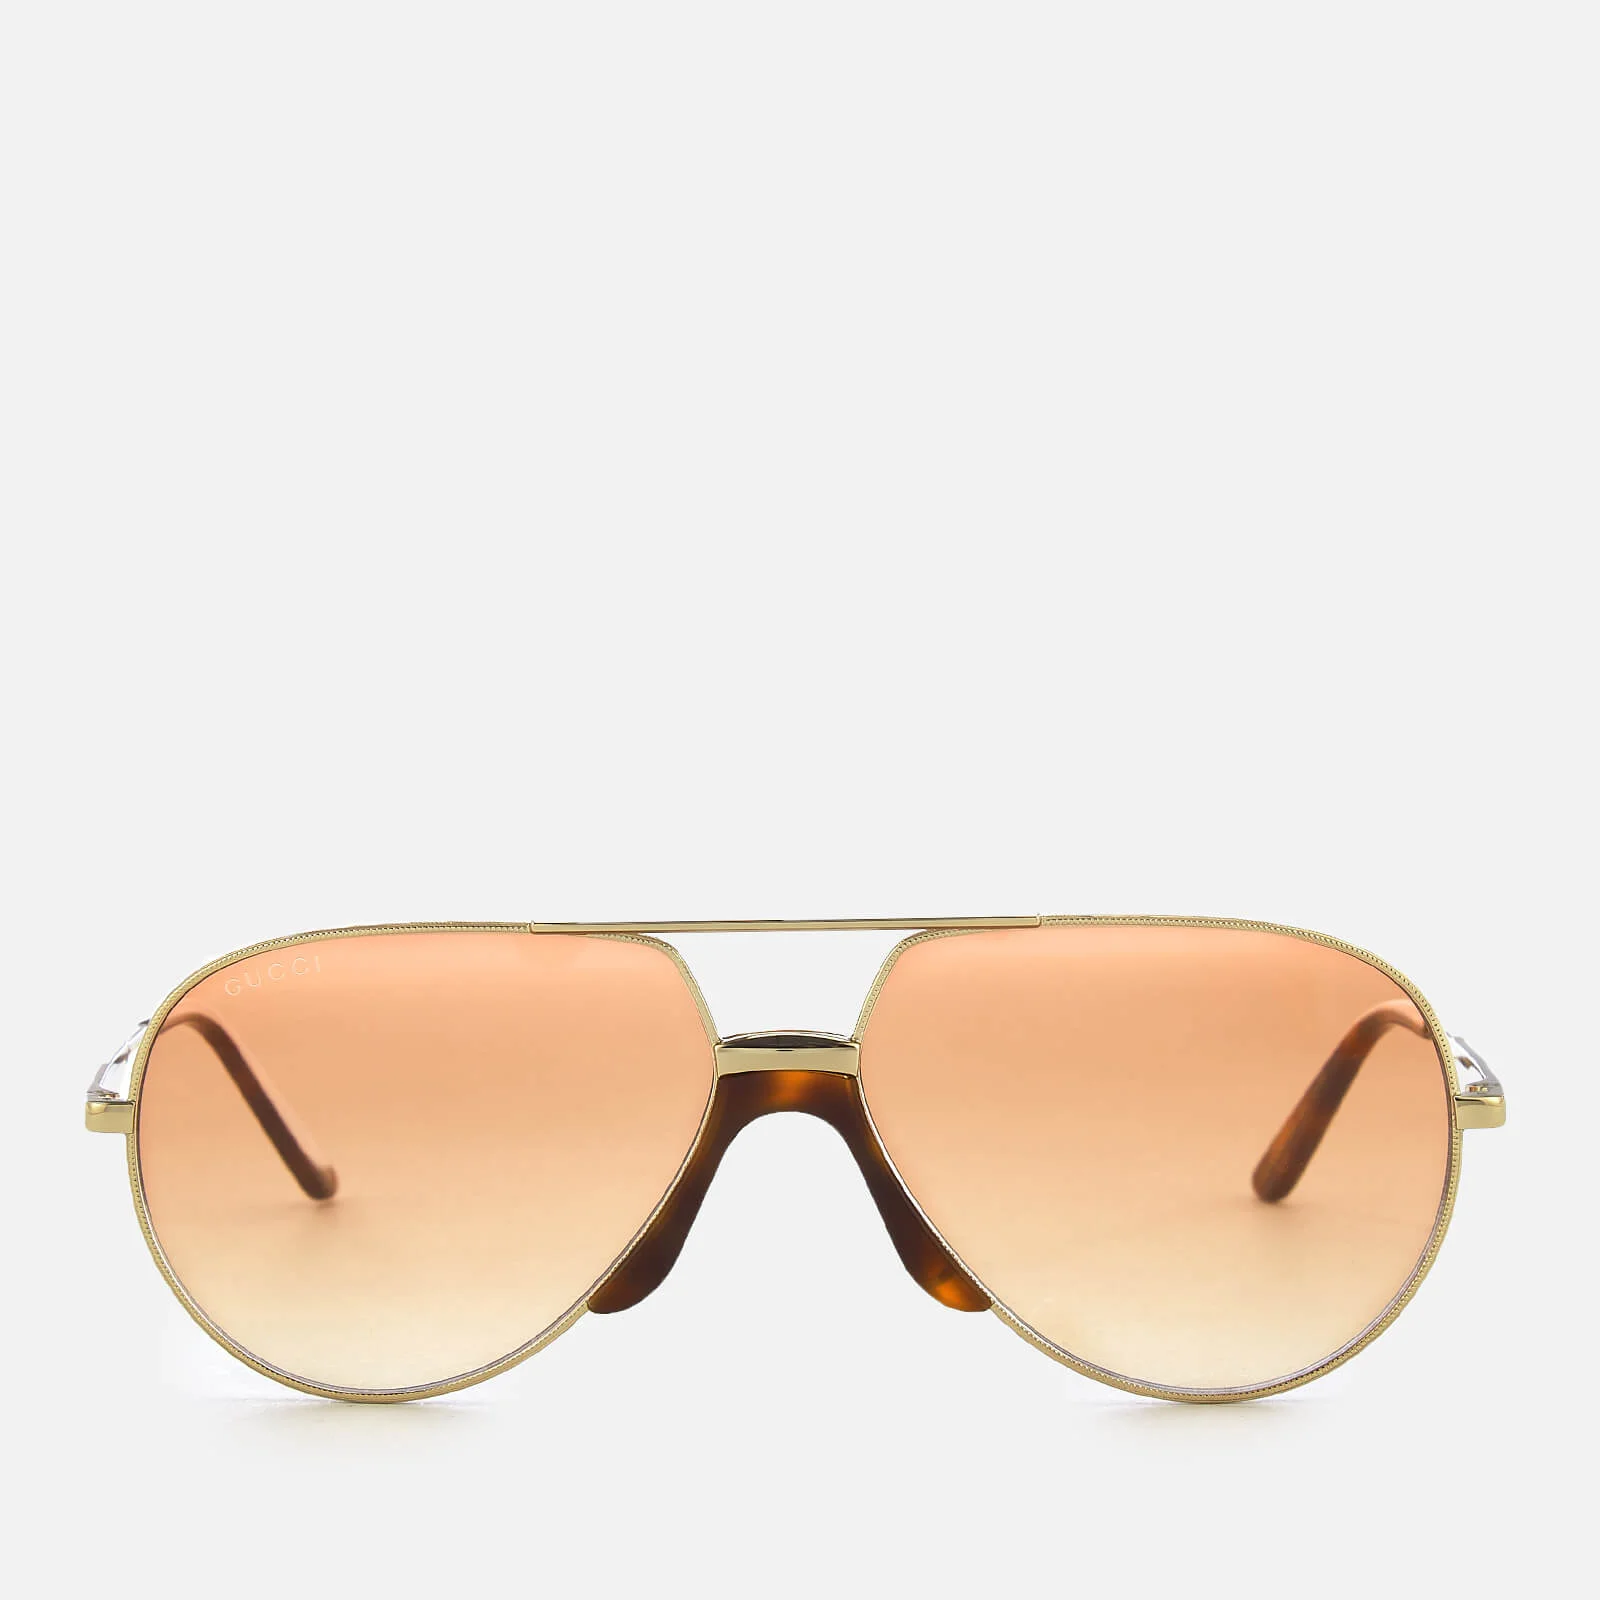 Gucci Aviator Style Sunglasses - Gold Image 1